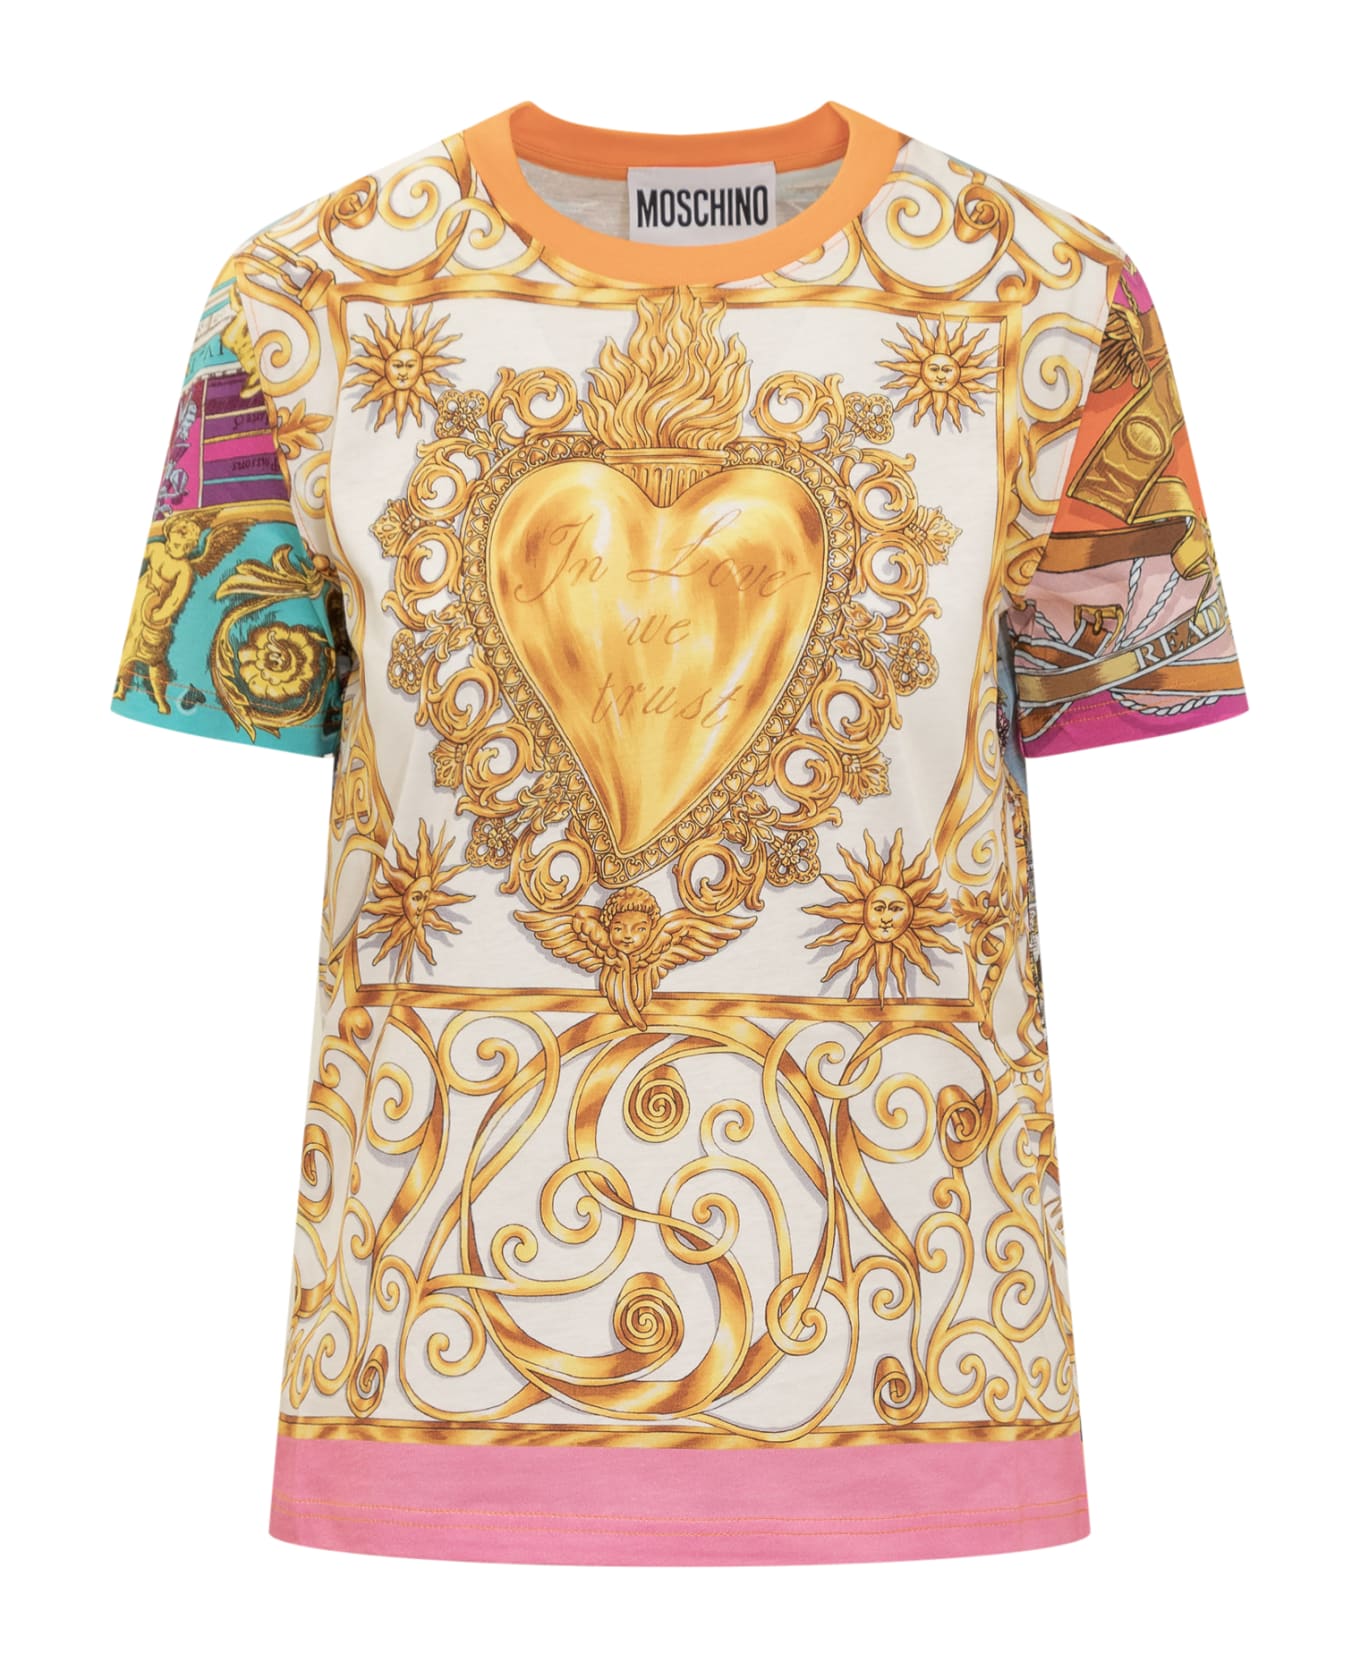 Moschino Foulard T-shirt - Multicolor